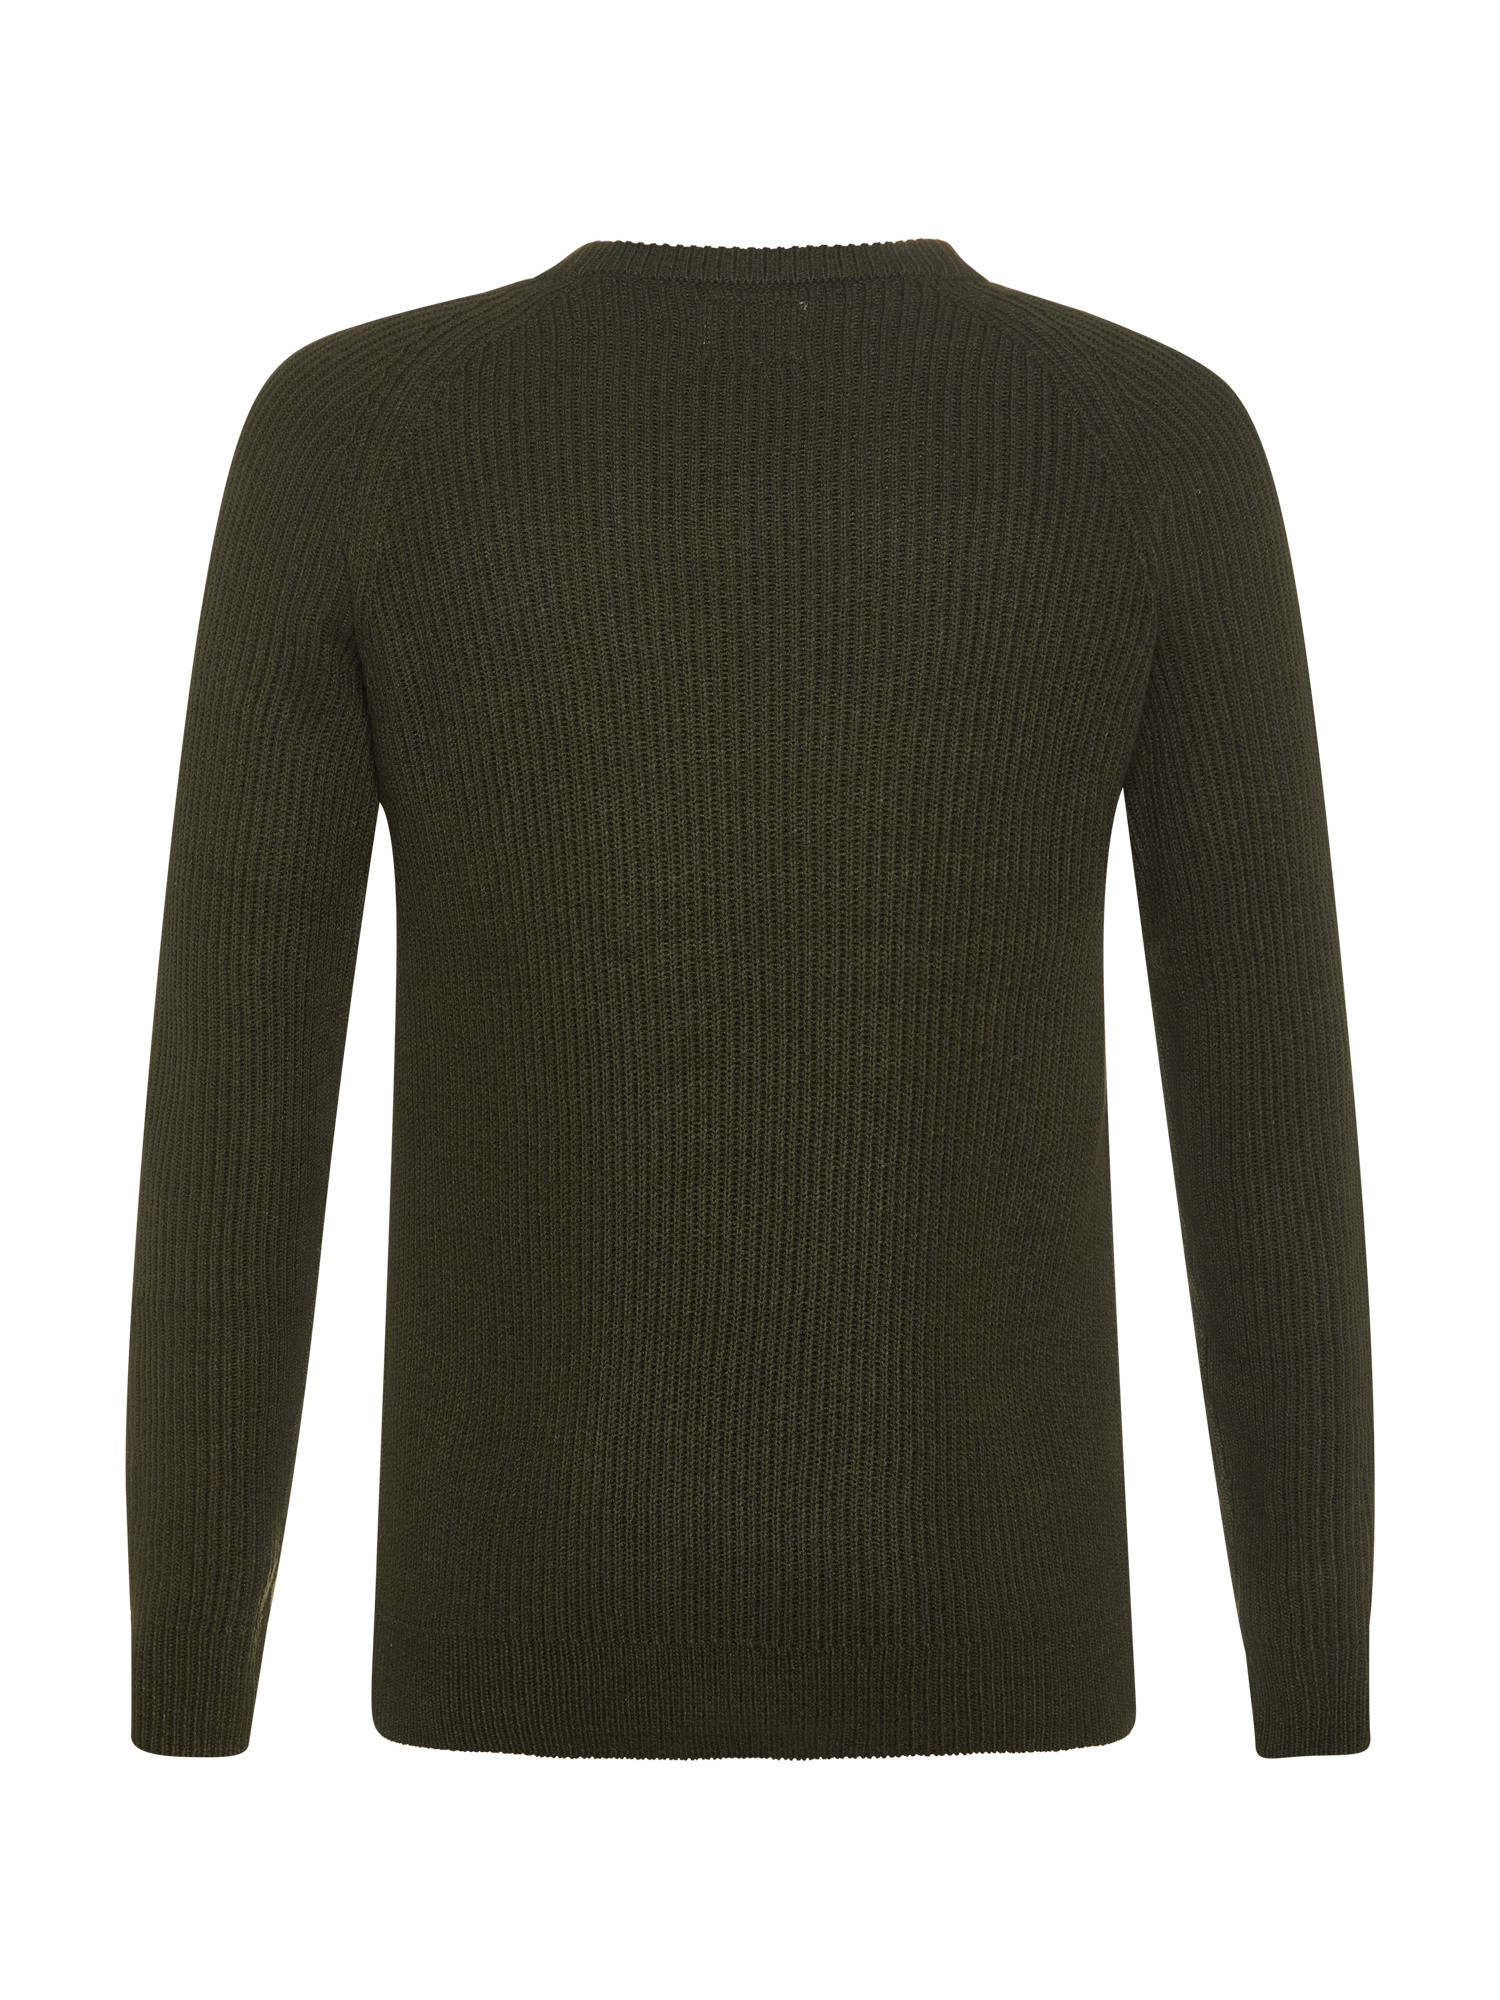 Jack & Jones - Pullover lavorato a maglia a coste, Verde scuro, large image number 1